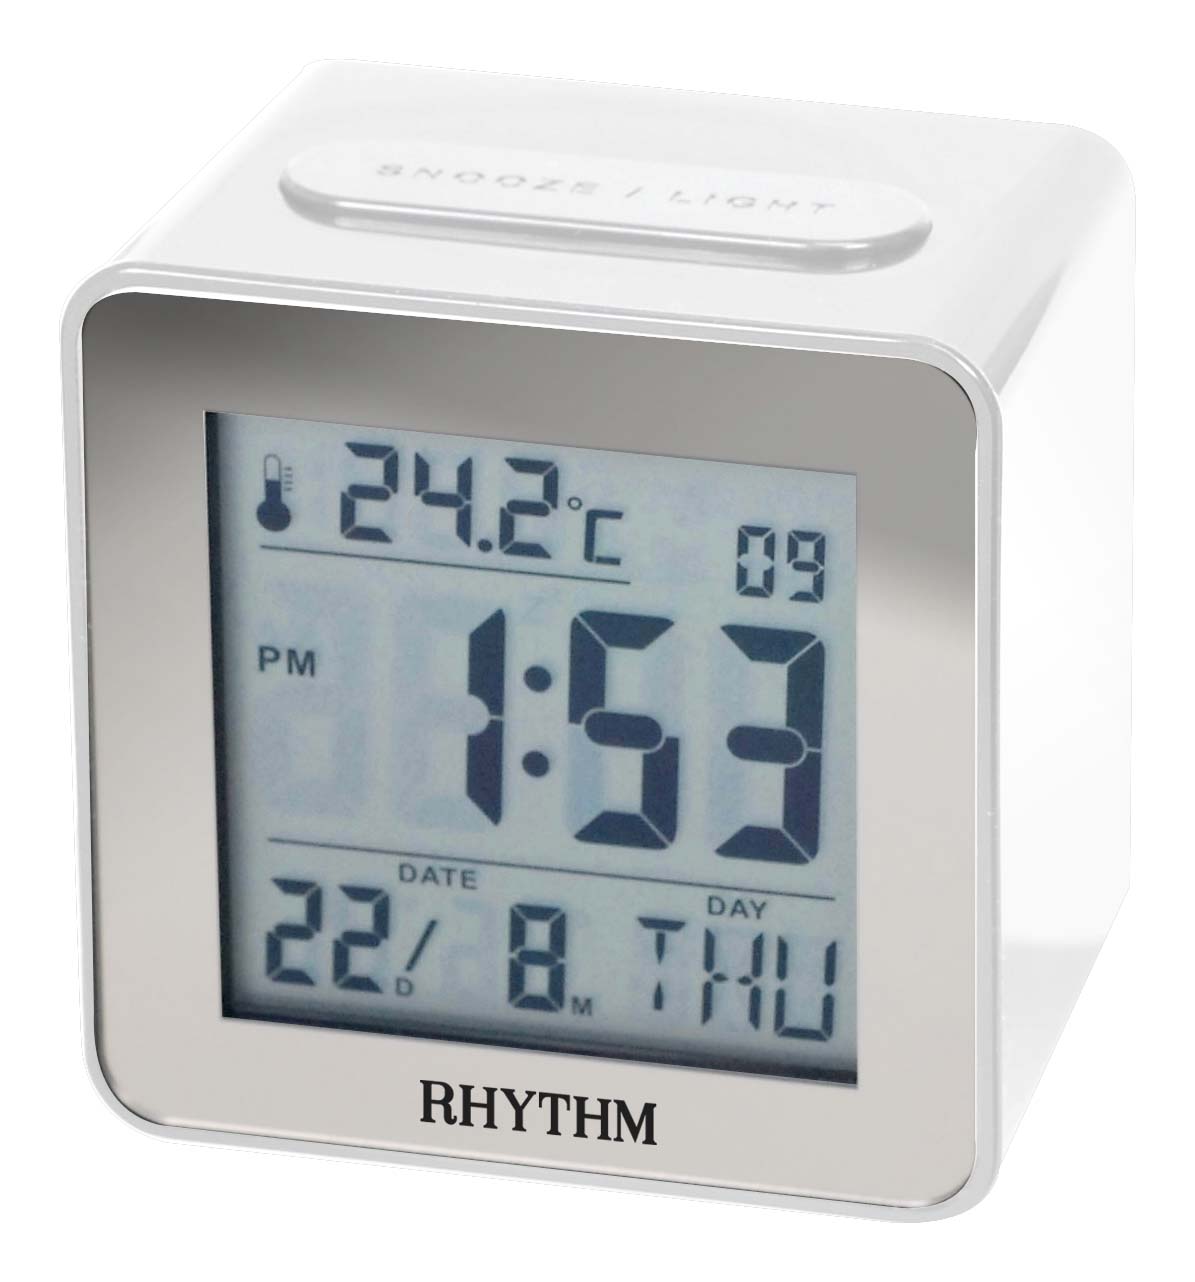 Rhythm Digital alarm clock white LCT076NR03